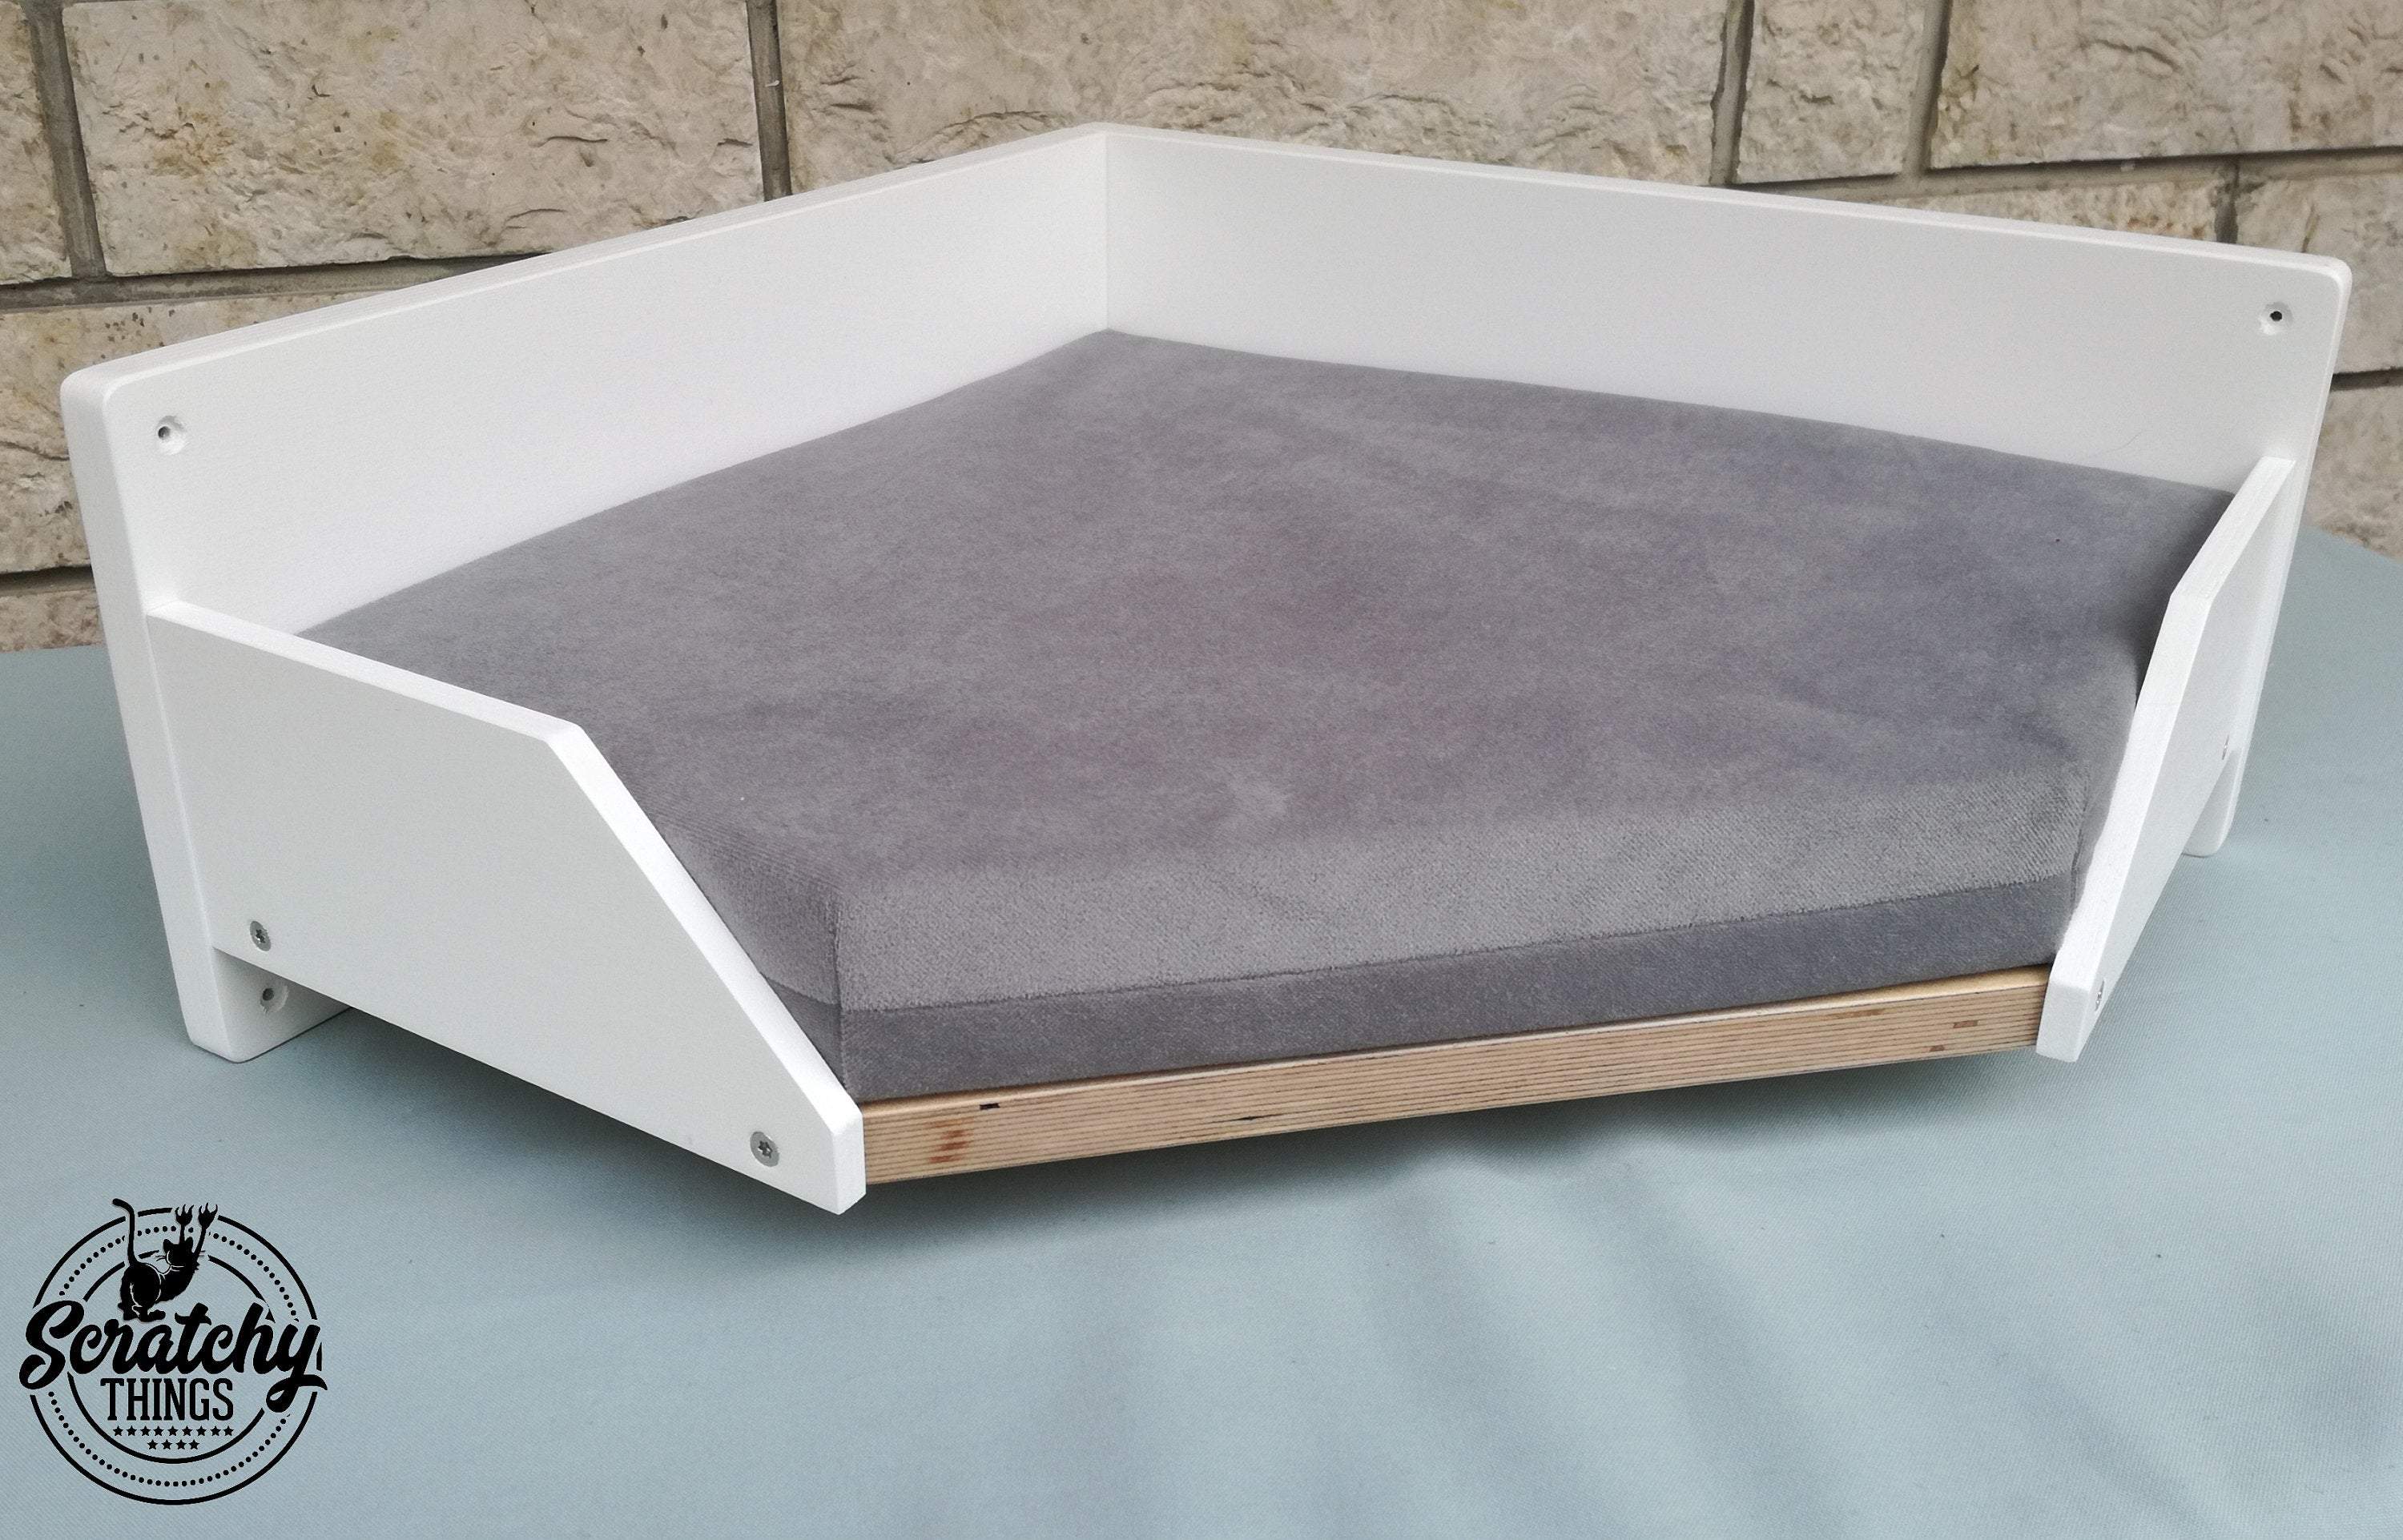 Big Cat Wall Shelf Bed - Wally BigCat Corner Plus - Scratchy Things Premium Pet Furniture